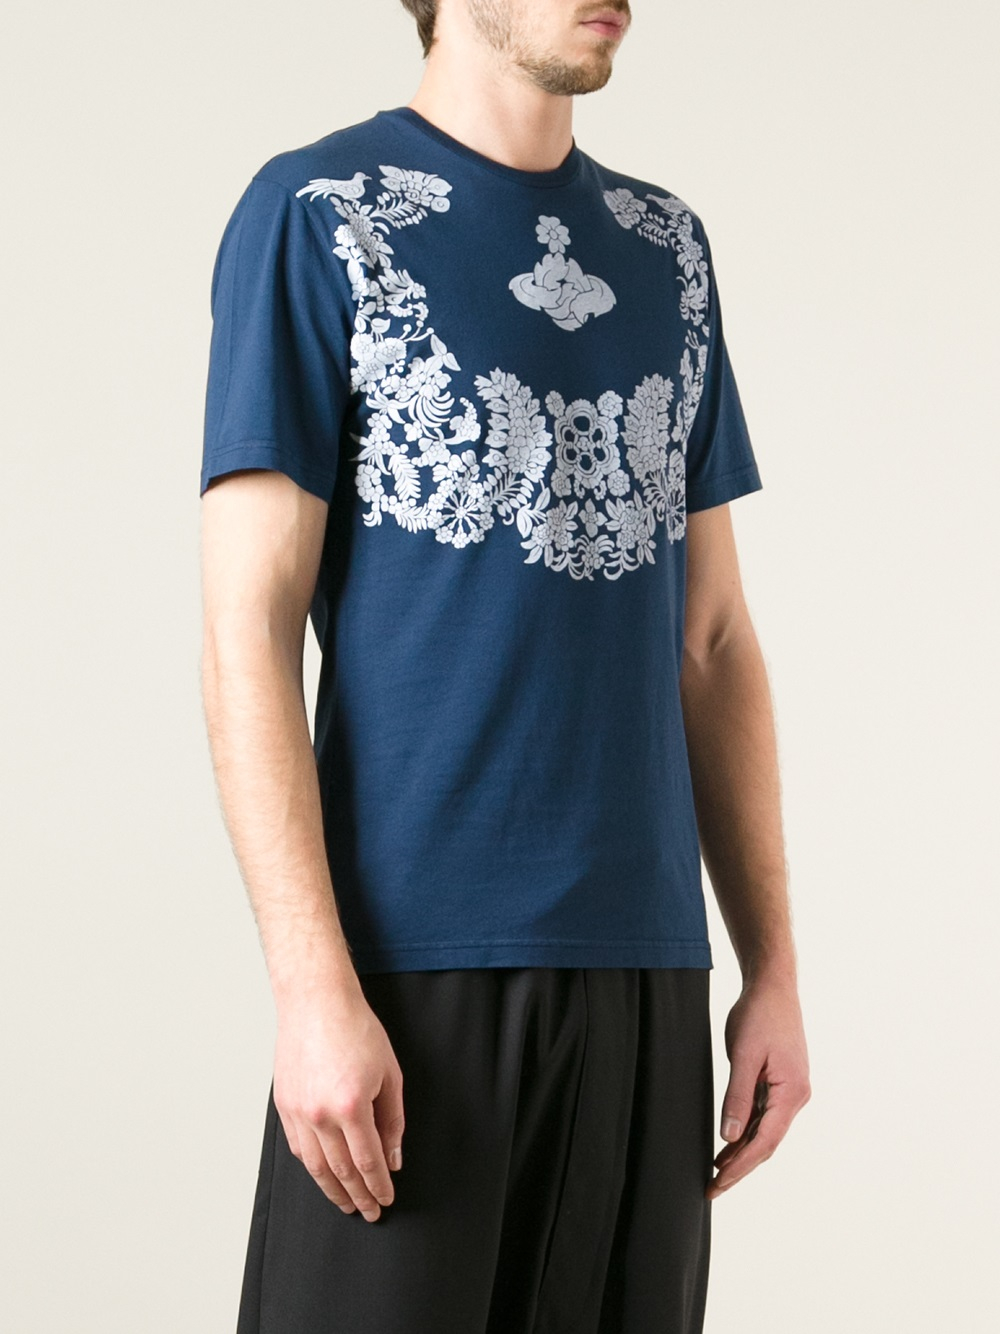 Vivienne Westwood Floral Print T-shirt in Blue for Men - Lyst